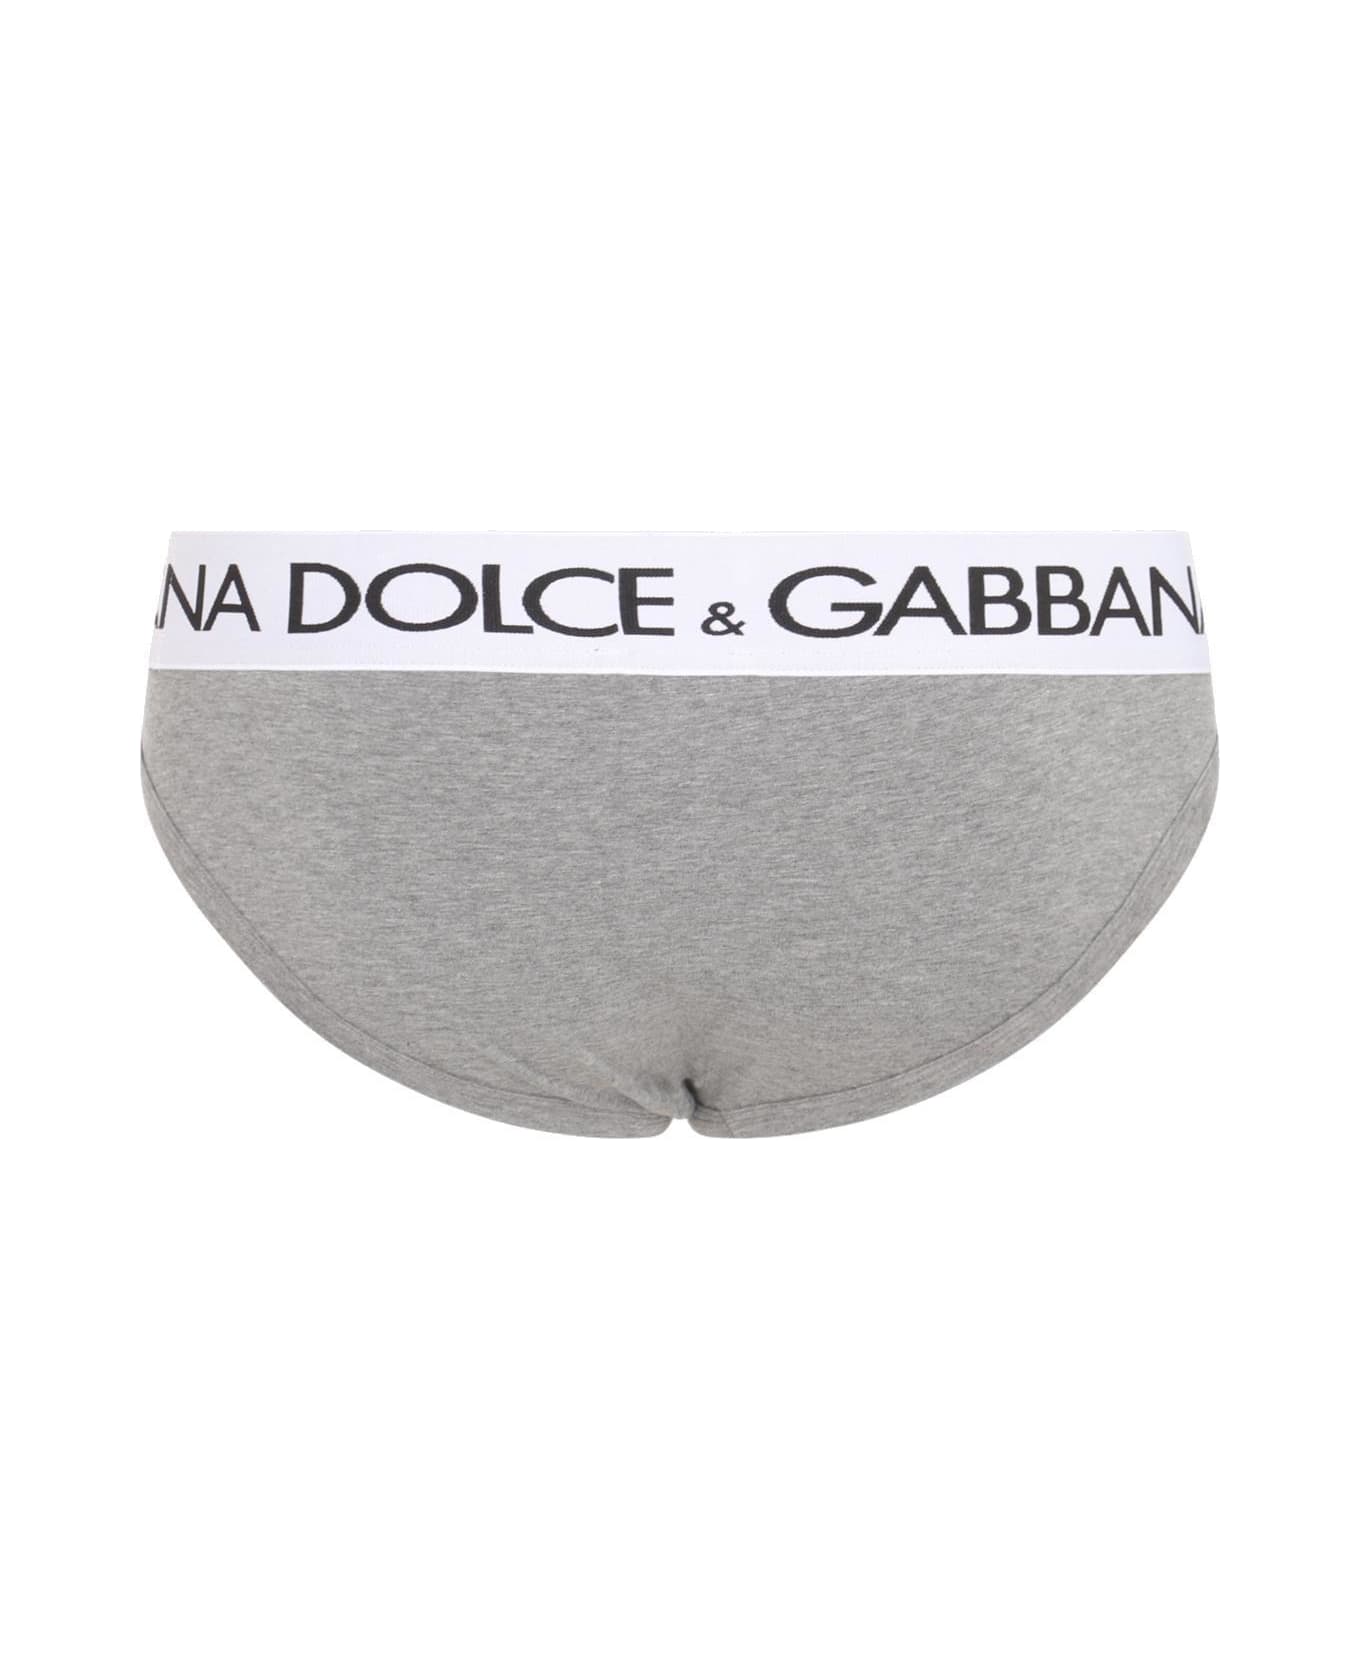 Dolce & Gabbana Elasticated Logo Waist Briefs - MELANGE GRIGI